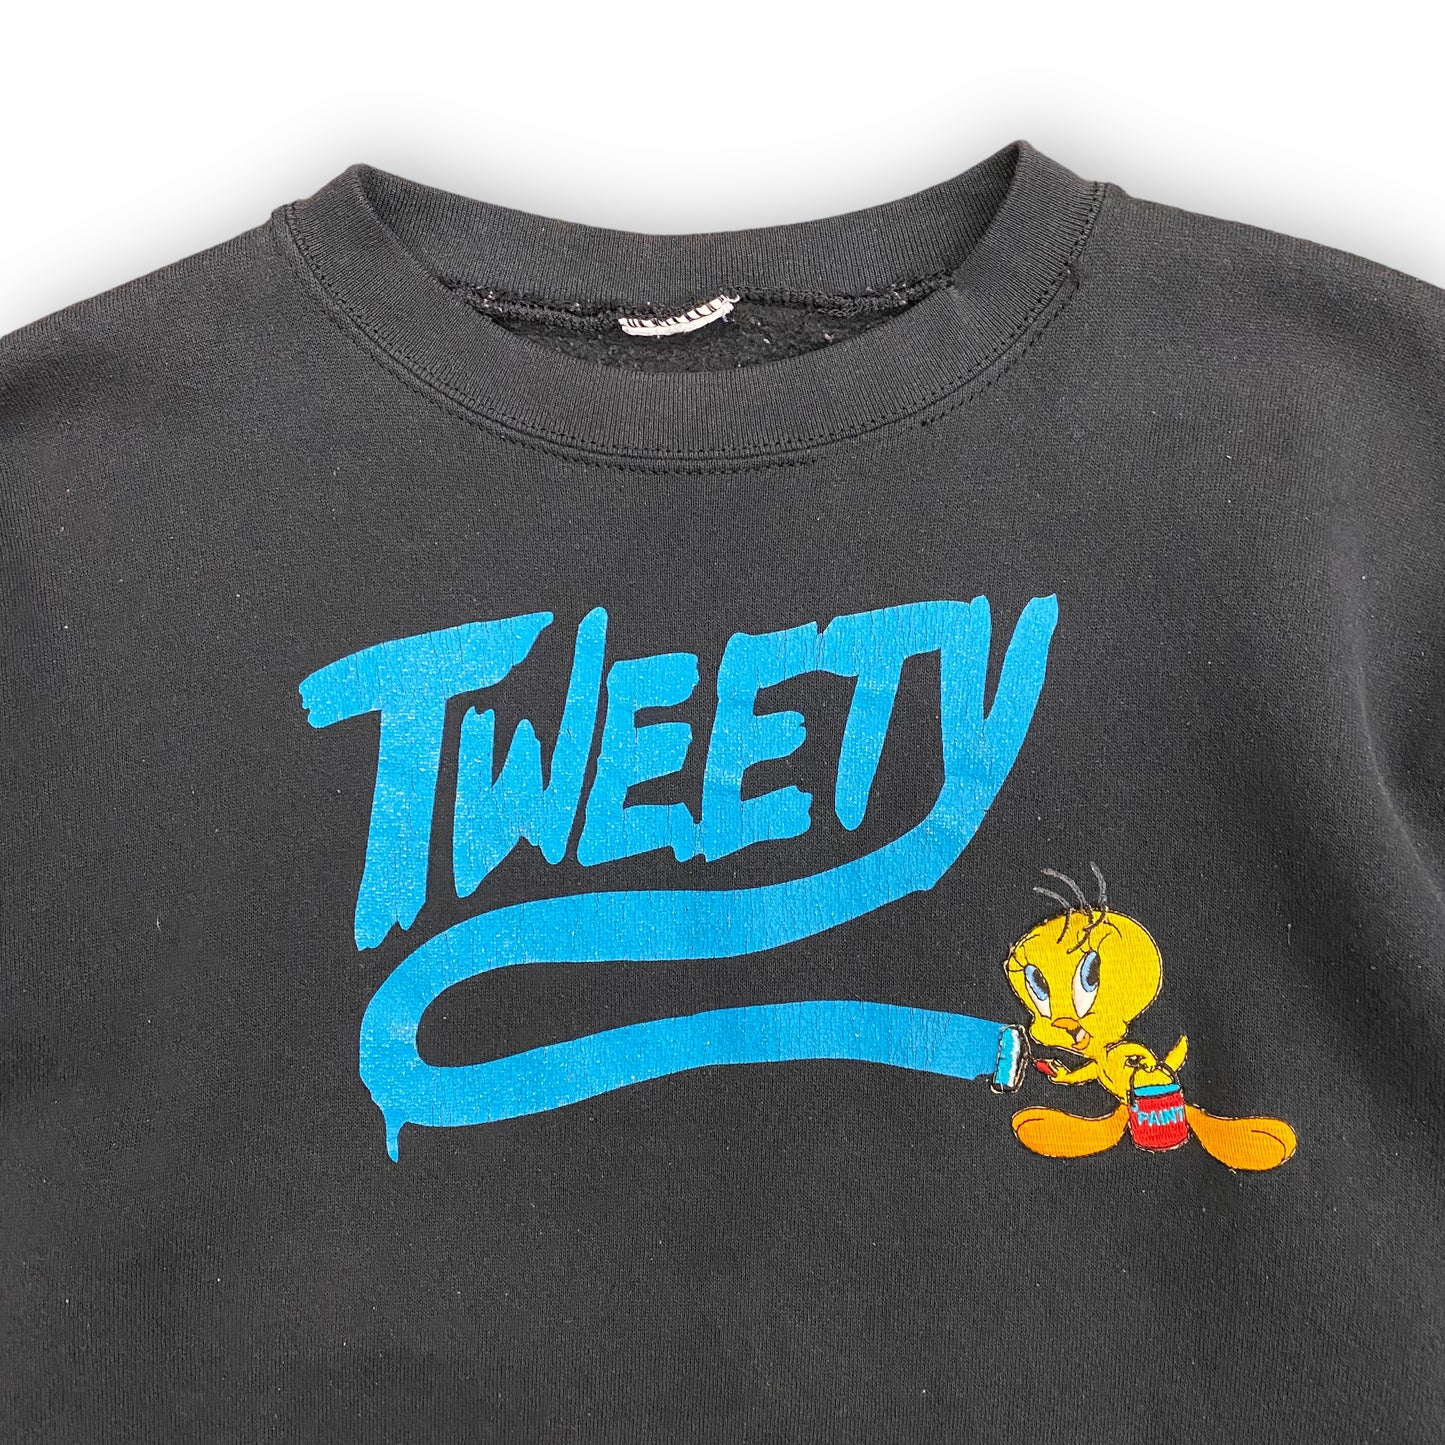 Vintage 1990s Tweety Looney Tunes Embroidered Crewneck - Size Medium